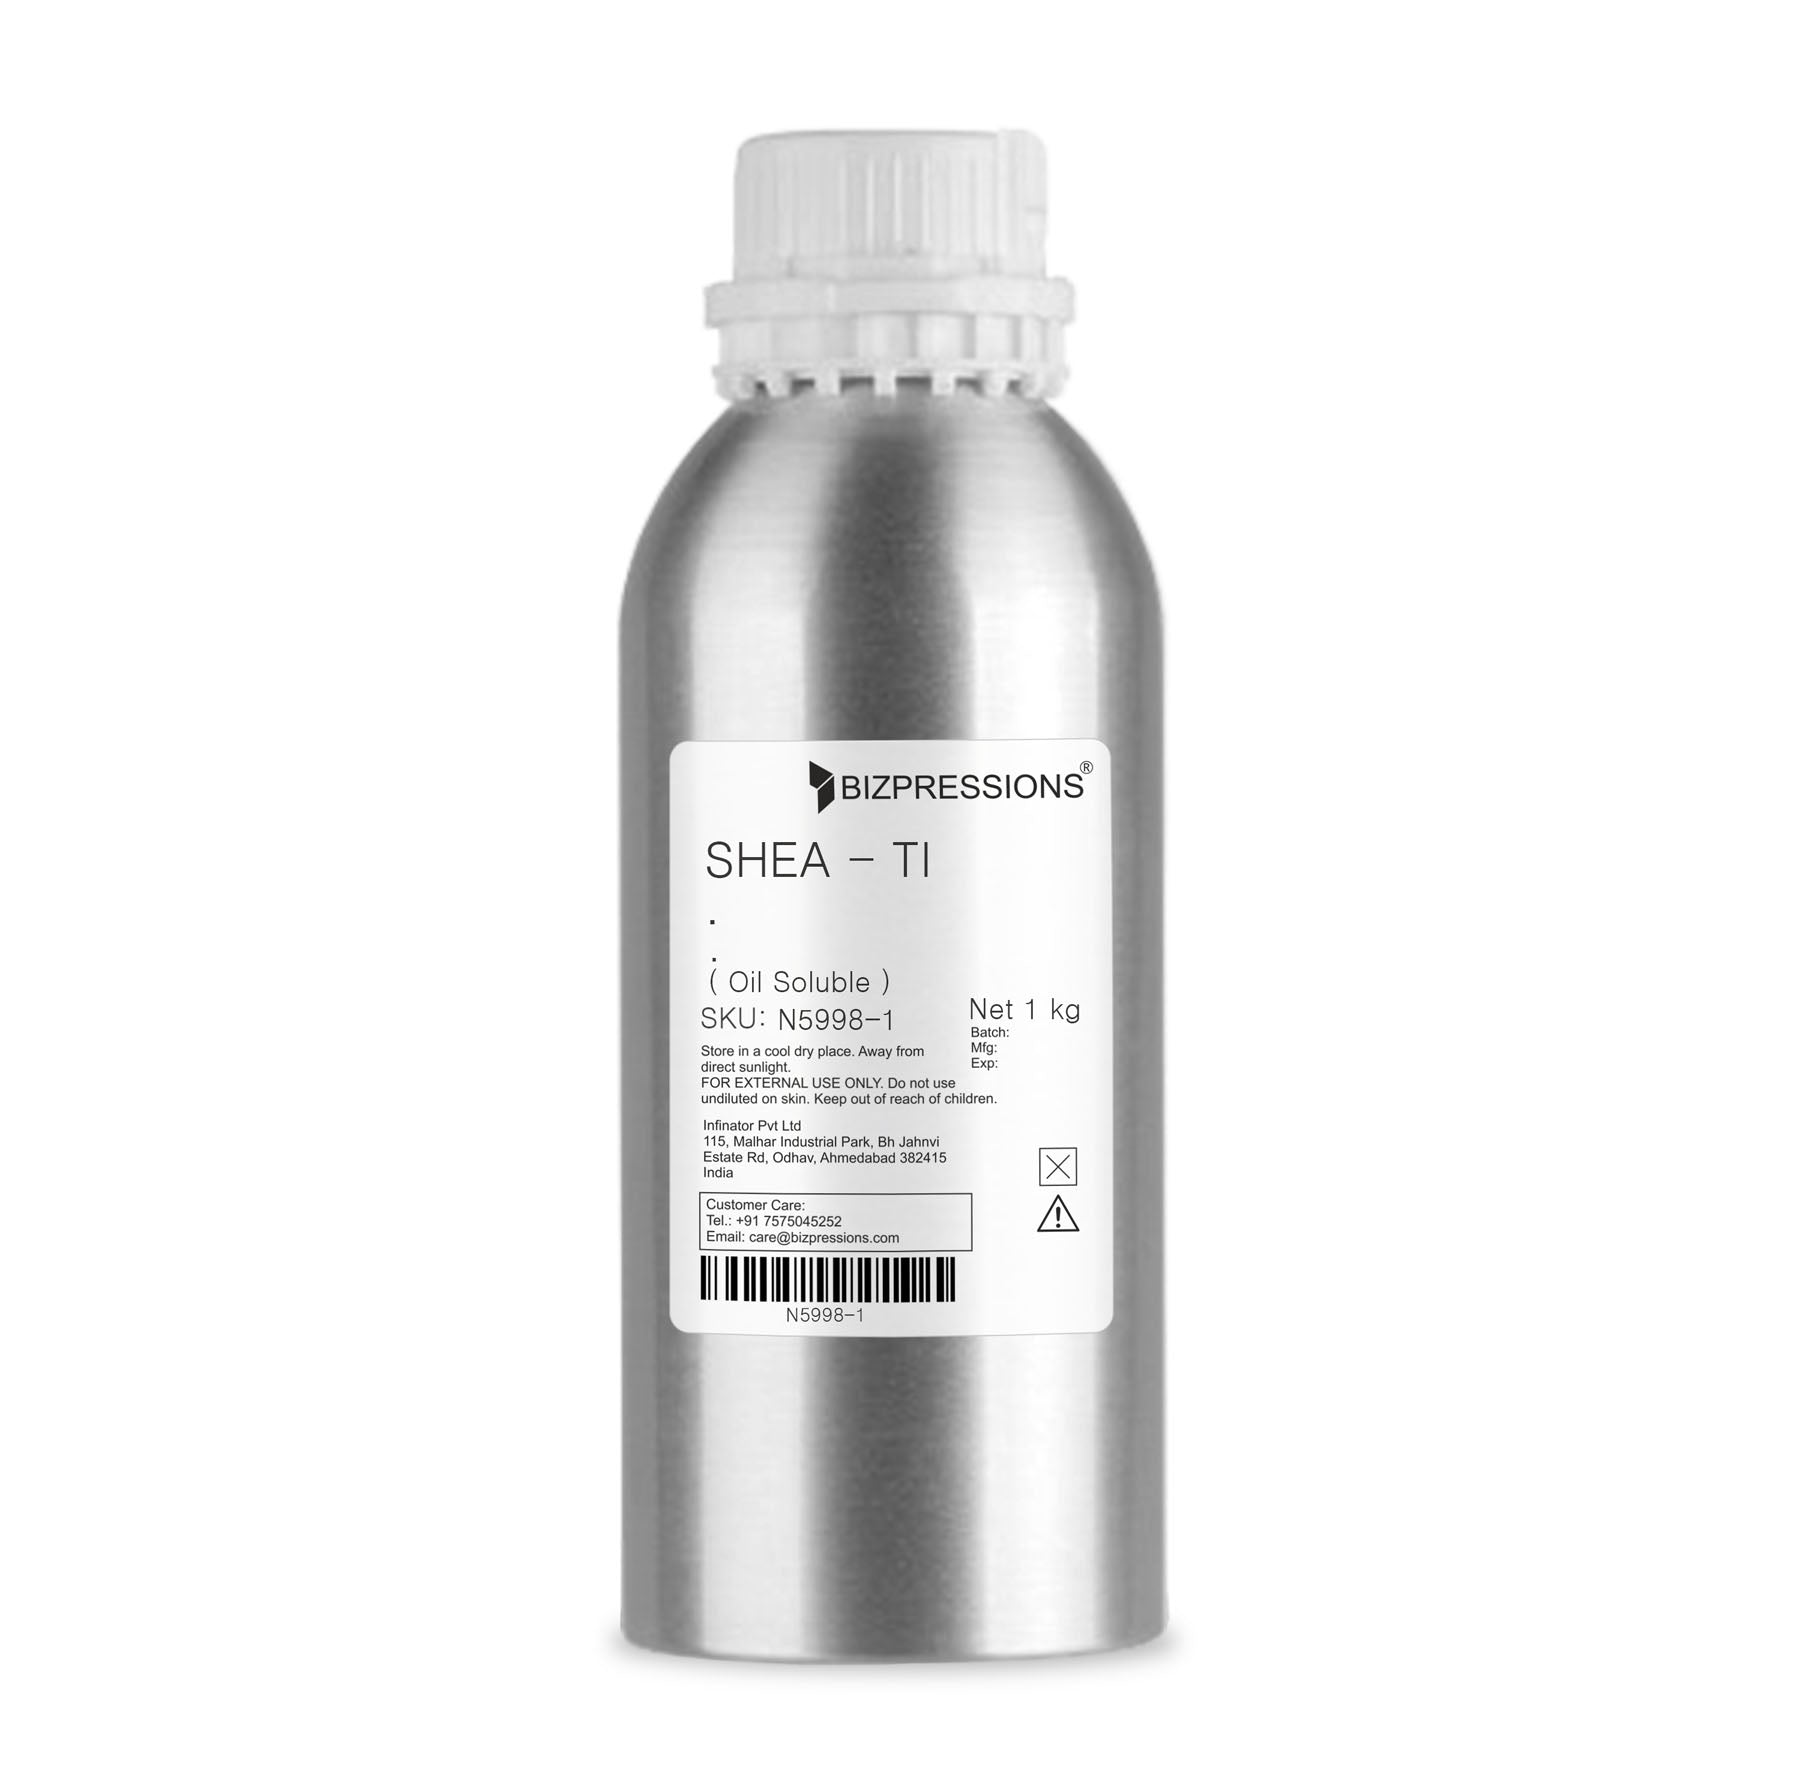 SHEA - TI - Fragrance ( Oil Soluble ) - 1 kg